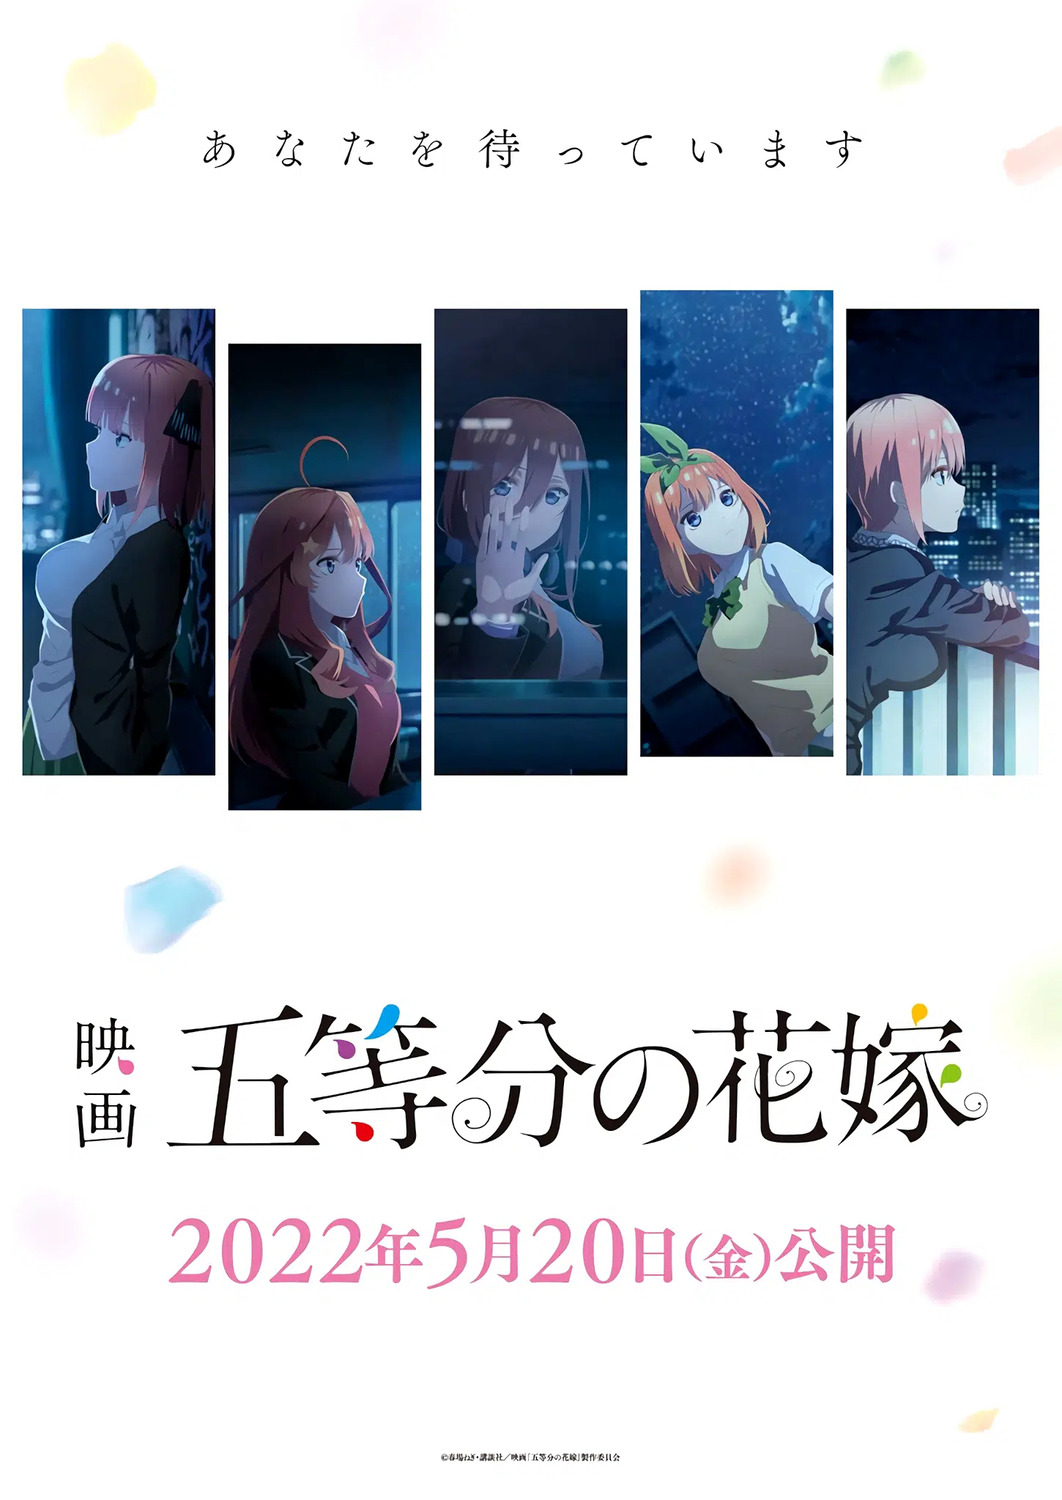 Extra Large TV Poster Image for Go-Toubun no Hanayome 